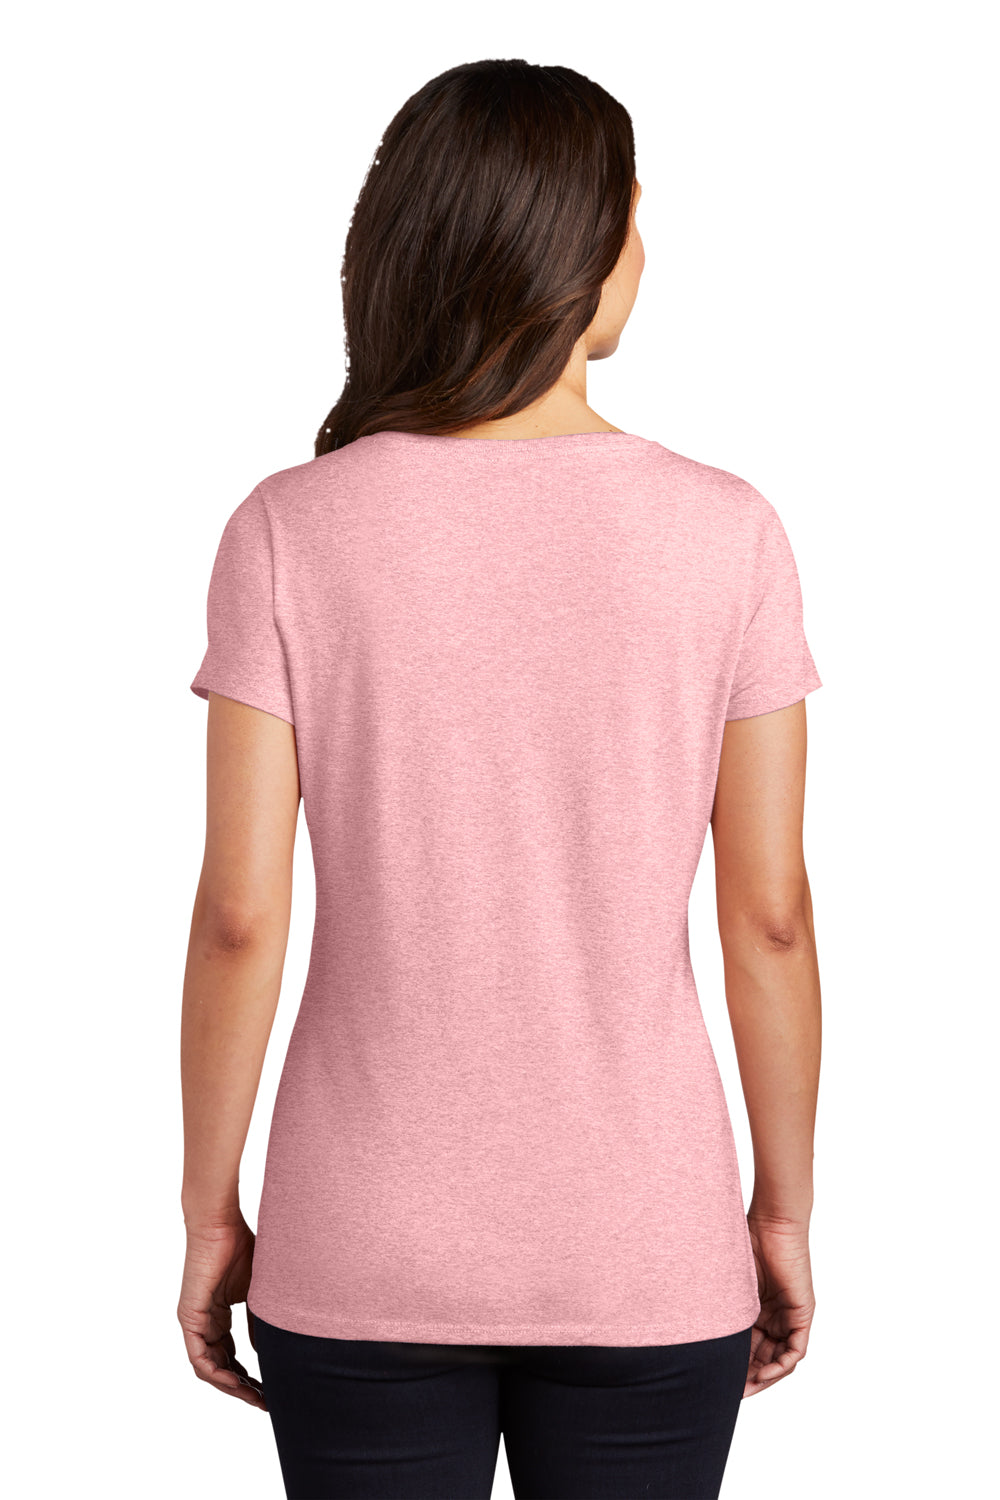 District DM1350L Womens Perfect Tri Short Sleeve V-Neck T-Shirt Heather Wisteria Pink Back